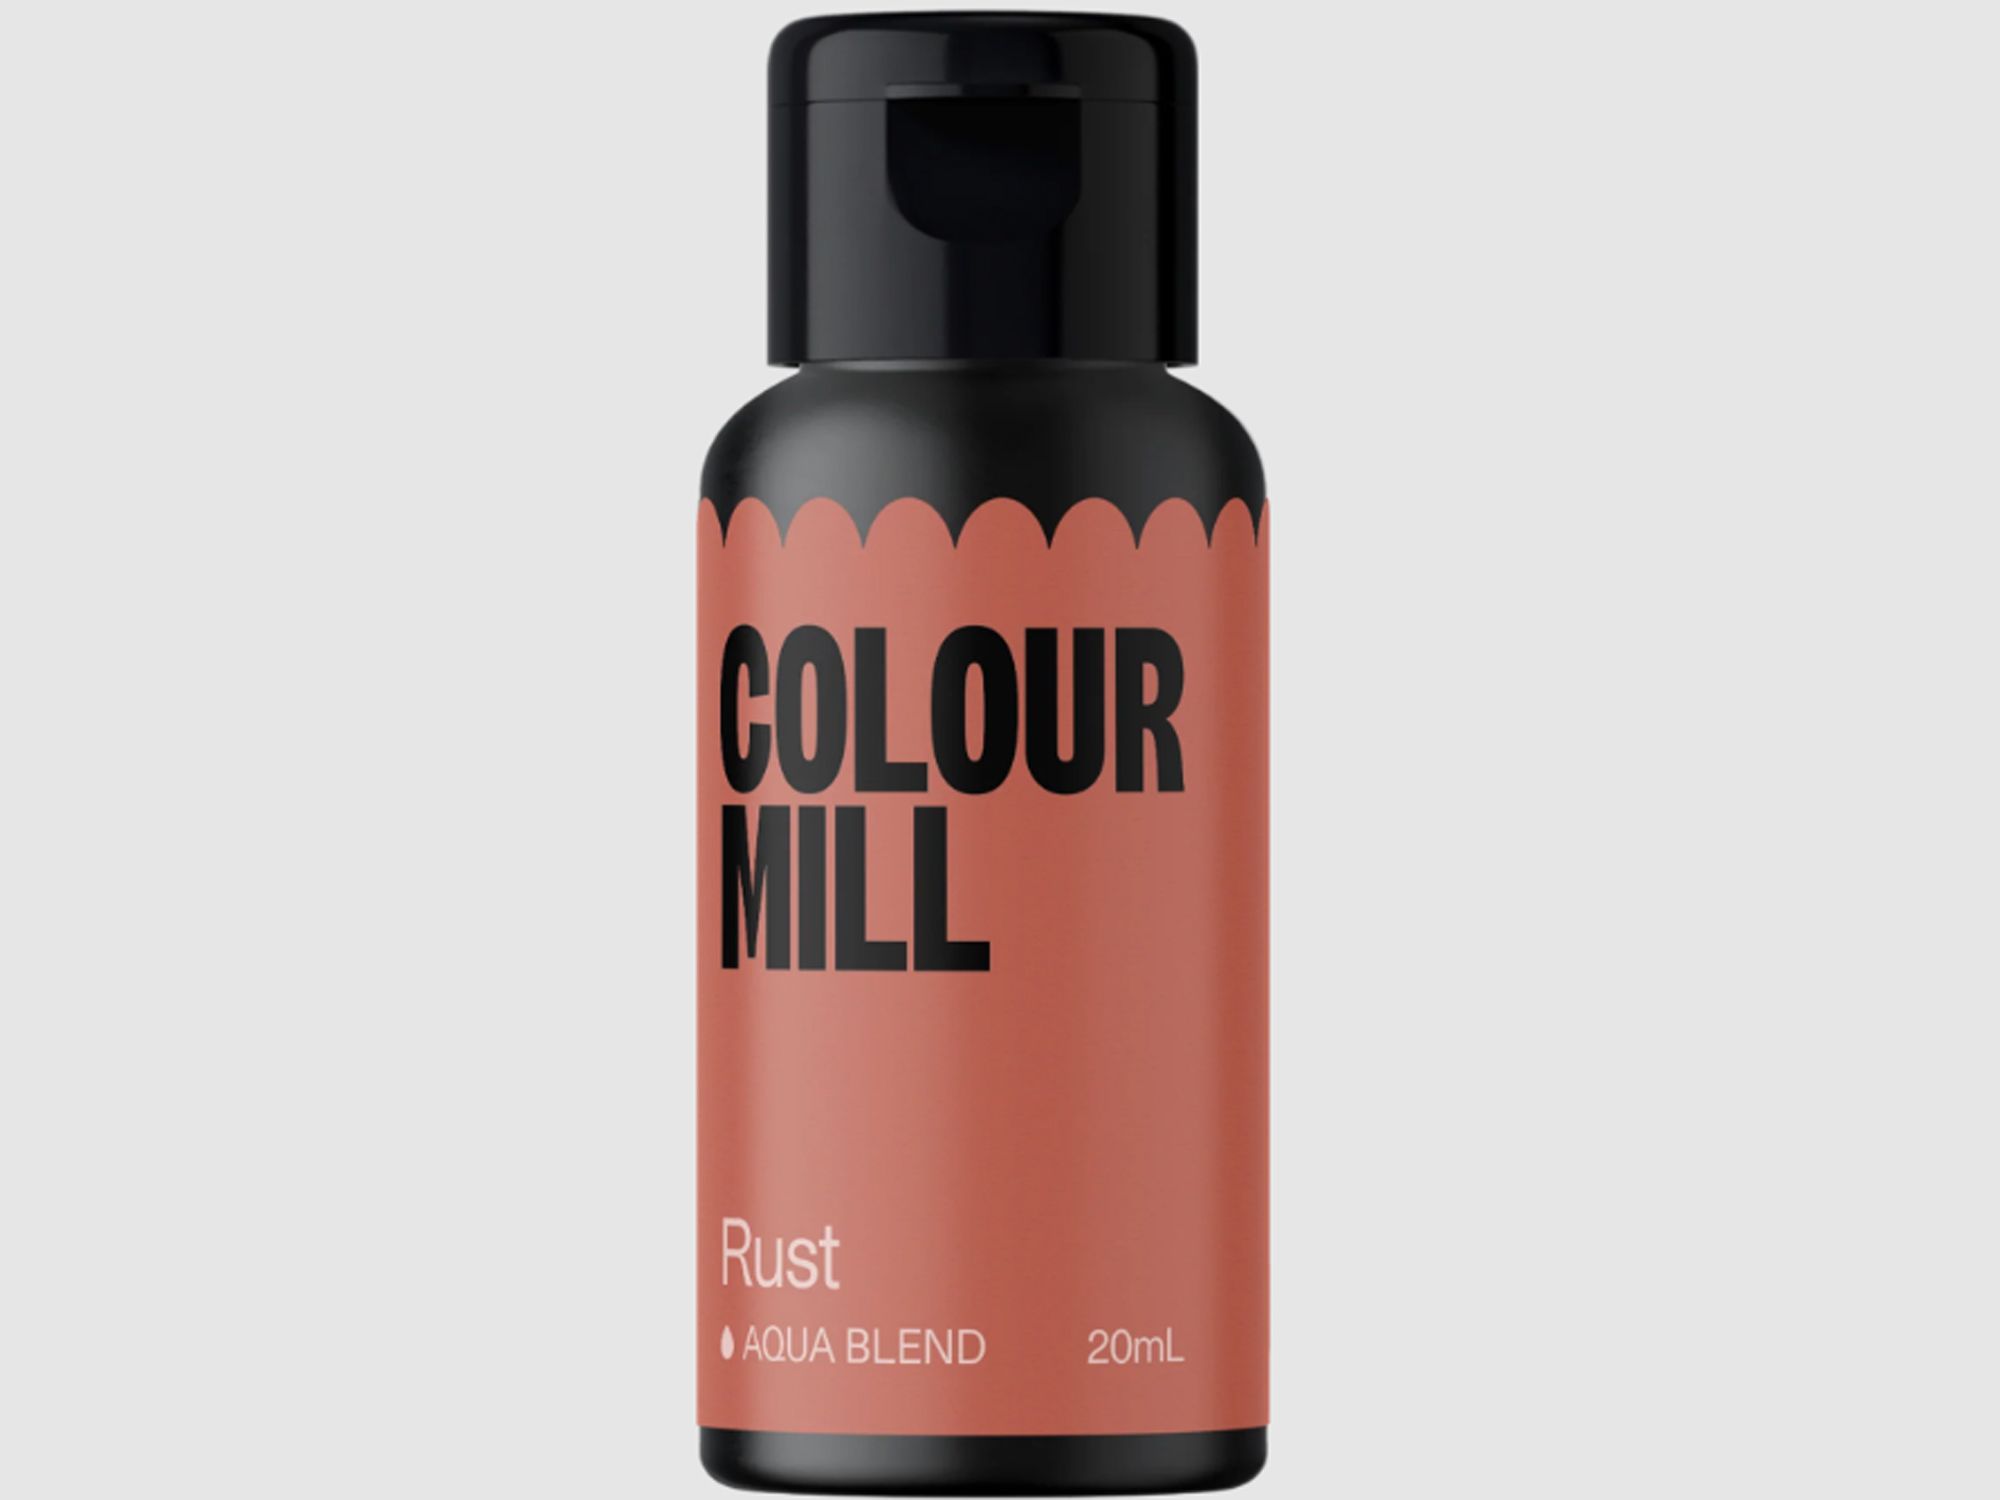 Colour Mill Rust (Aqua Blend) 20ml